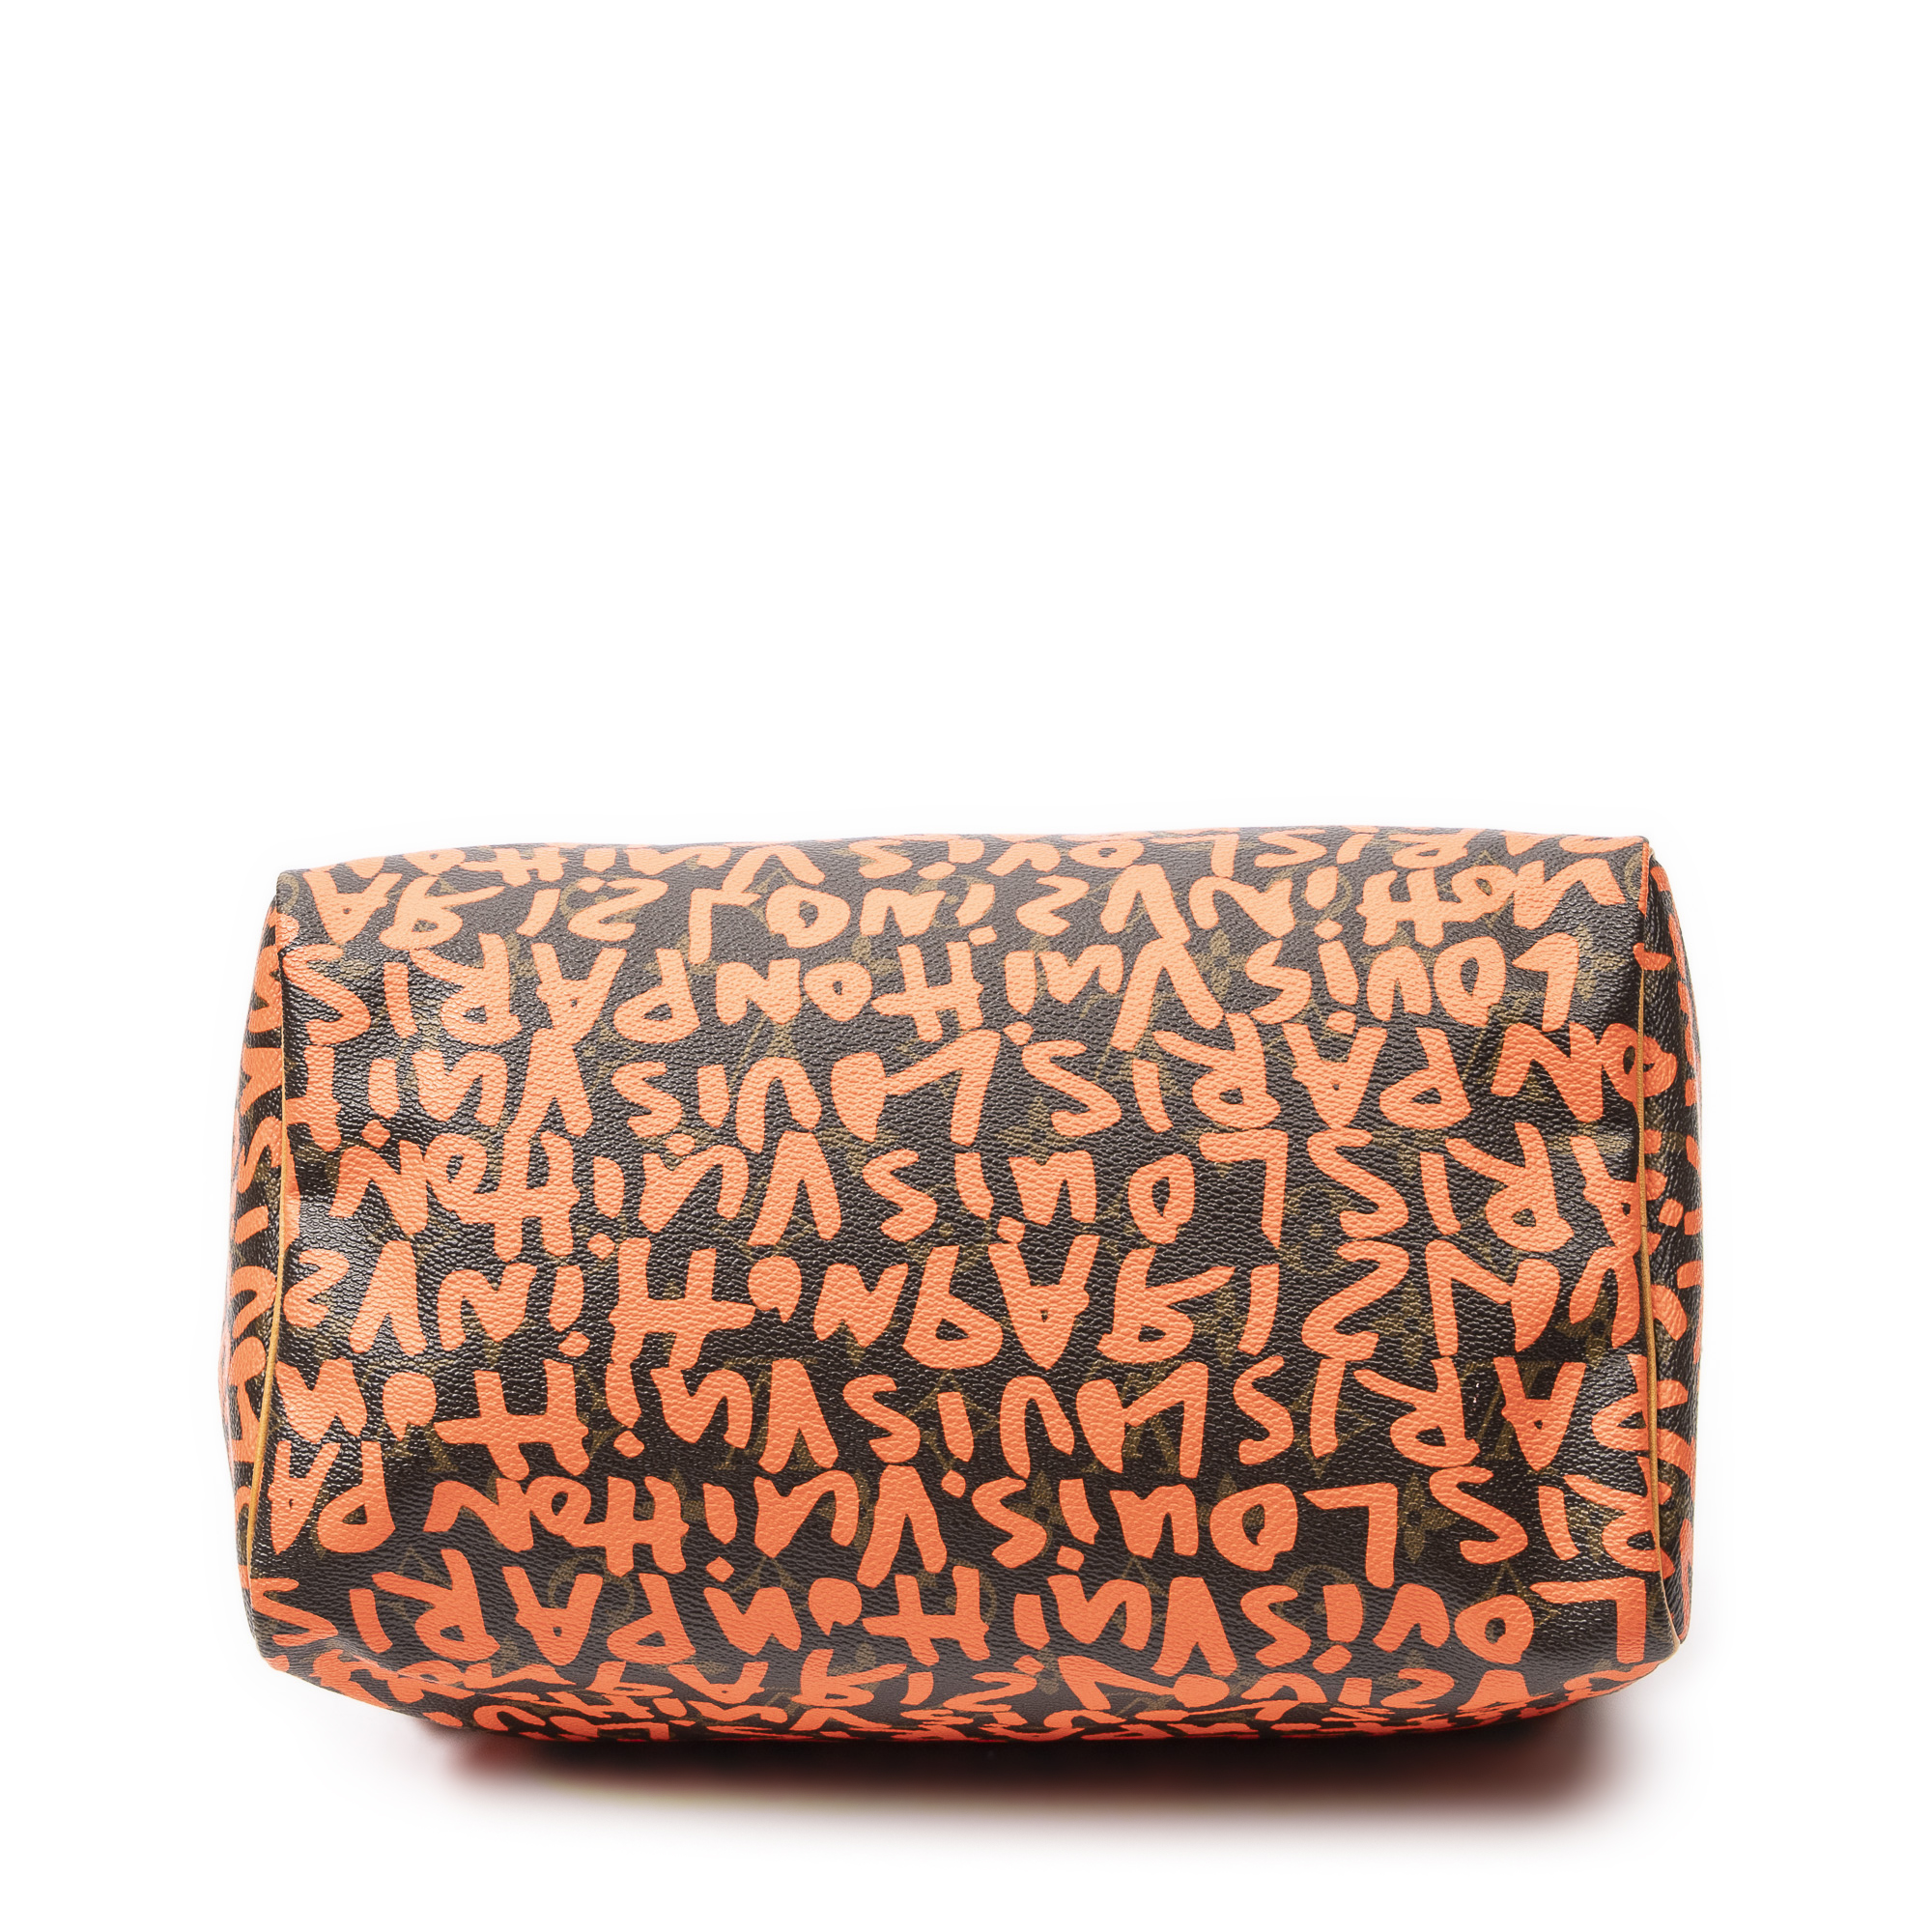 Louis Vuitton Stephen Sprouse Brown and Orange Monogram Graffiti Speedy 30 Gold Hardware, 2008 (Very Good), Womens Handbag